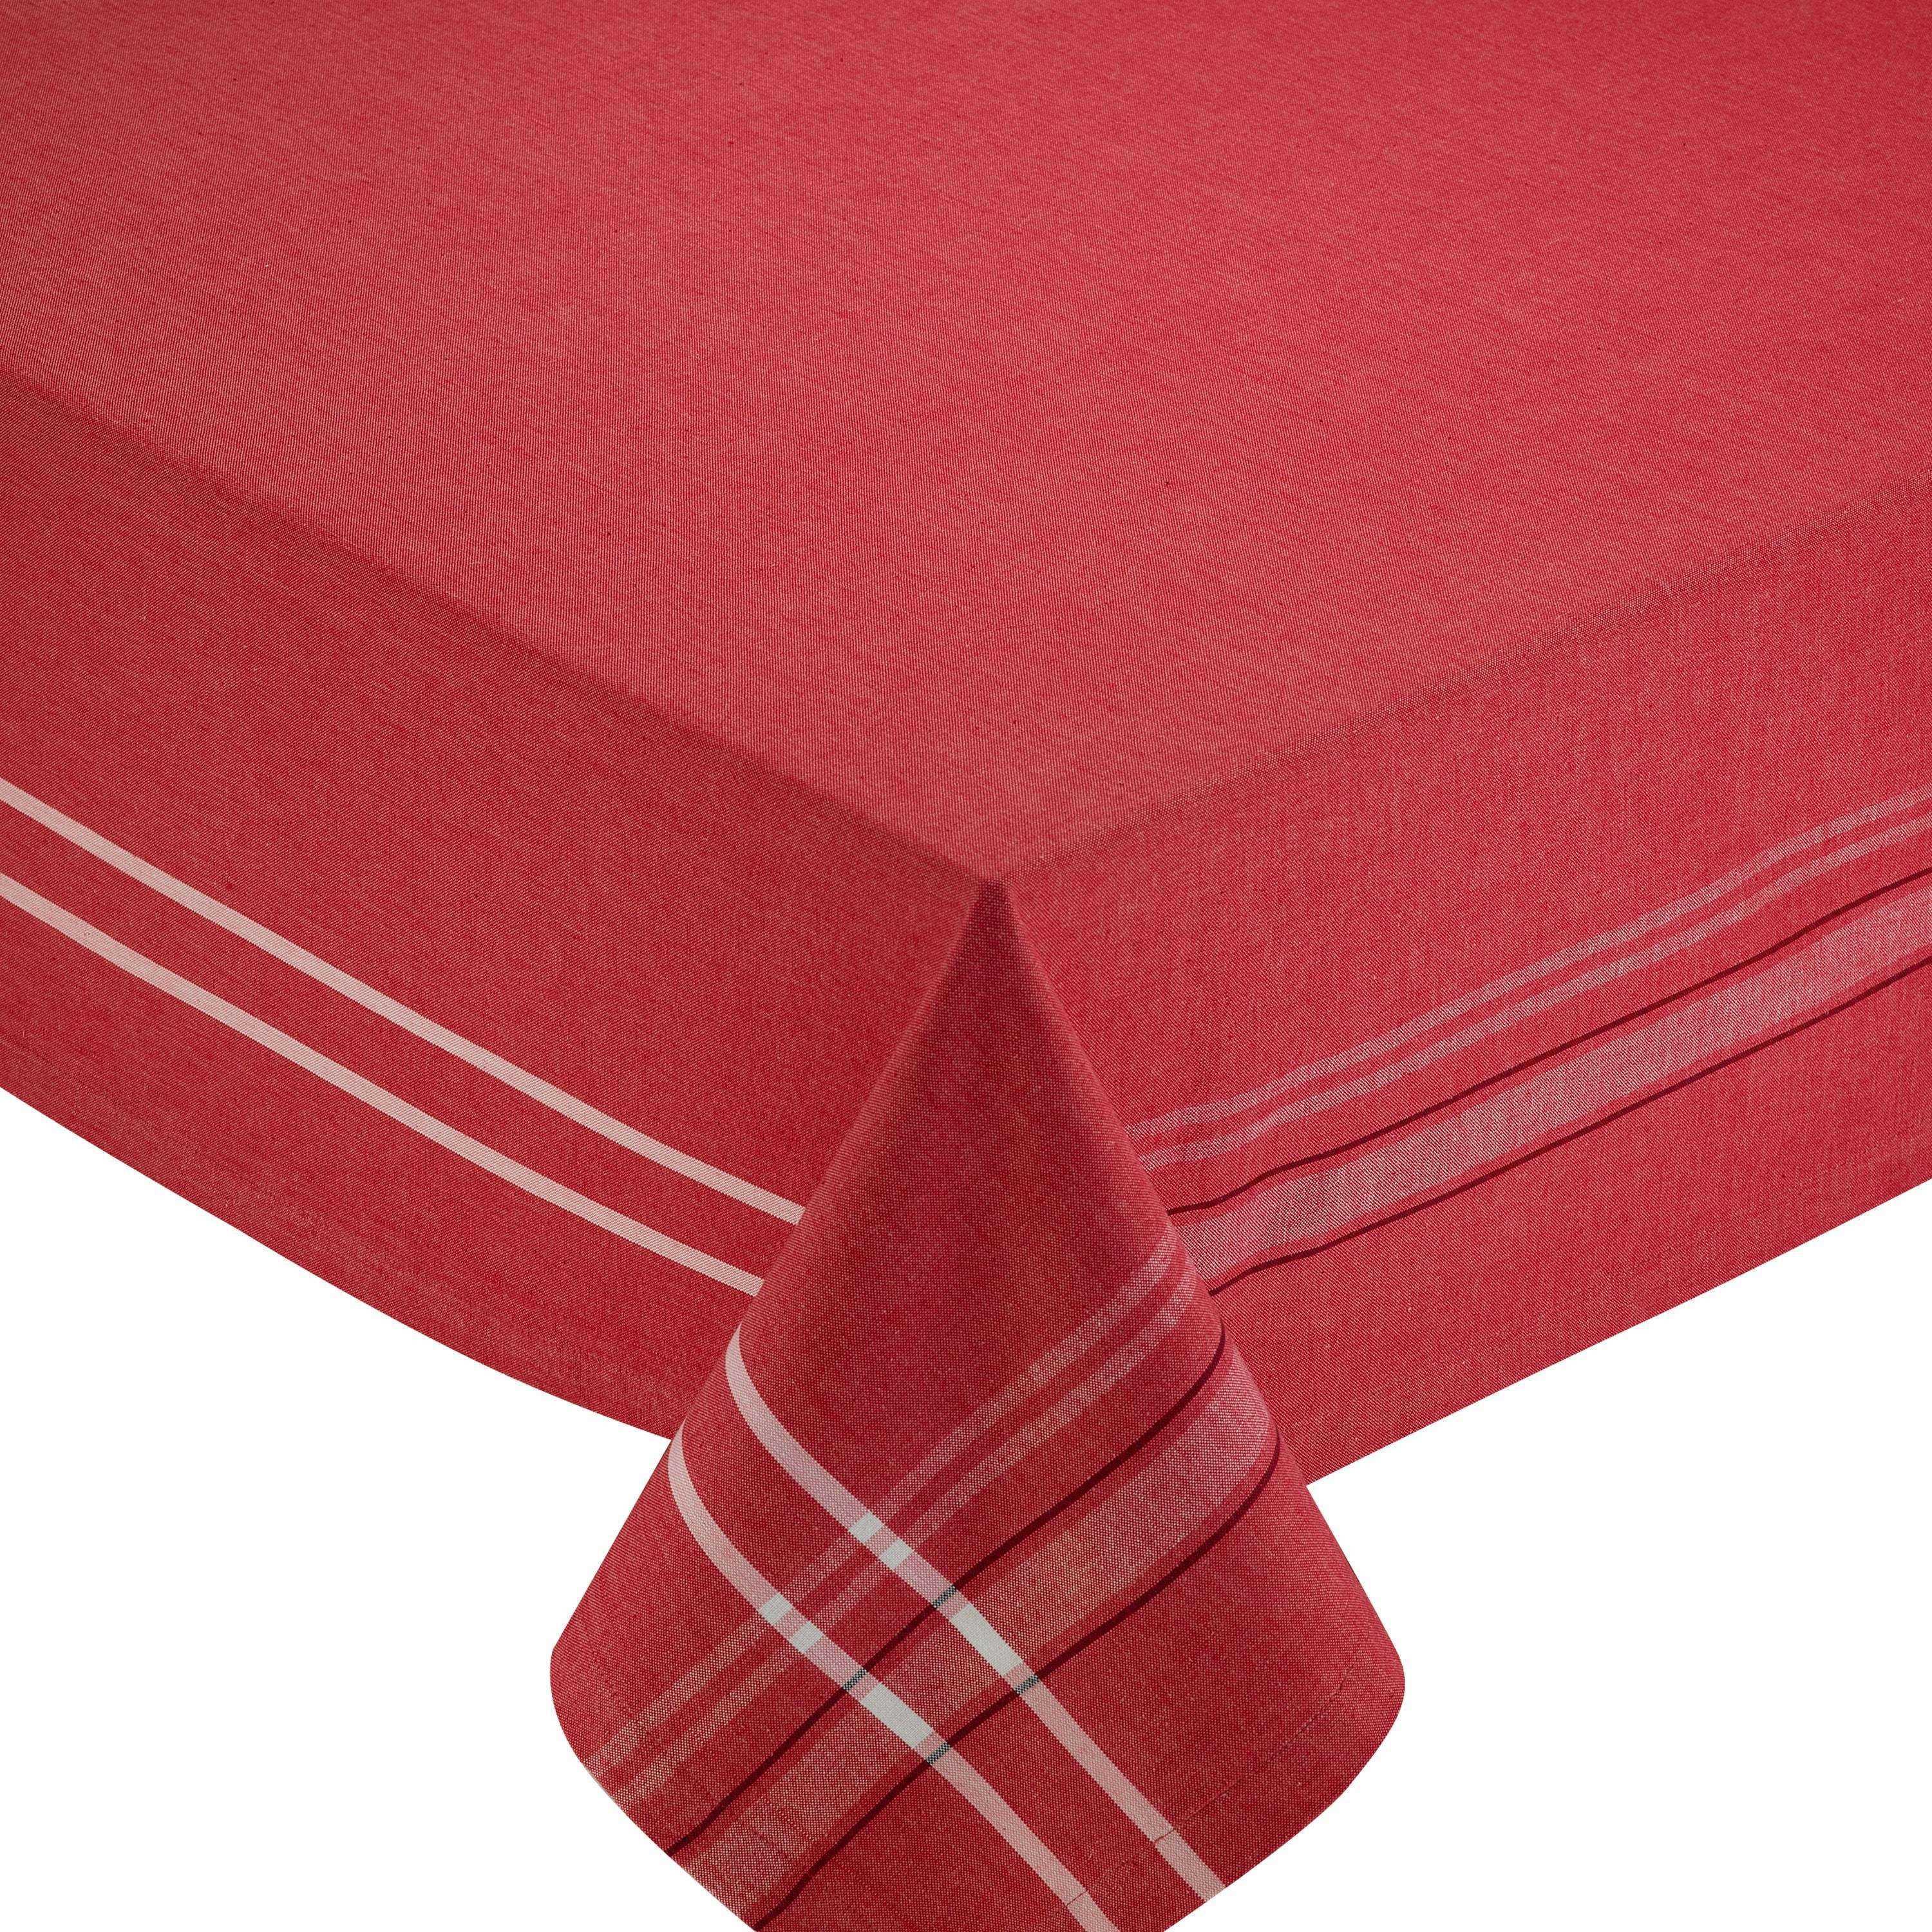 60 inch round vinyl tablecloth elastic